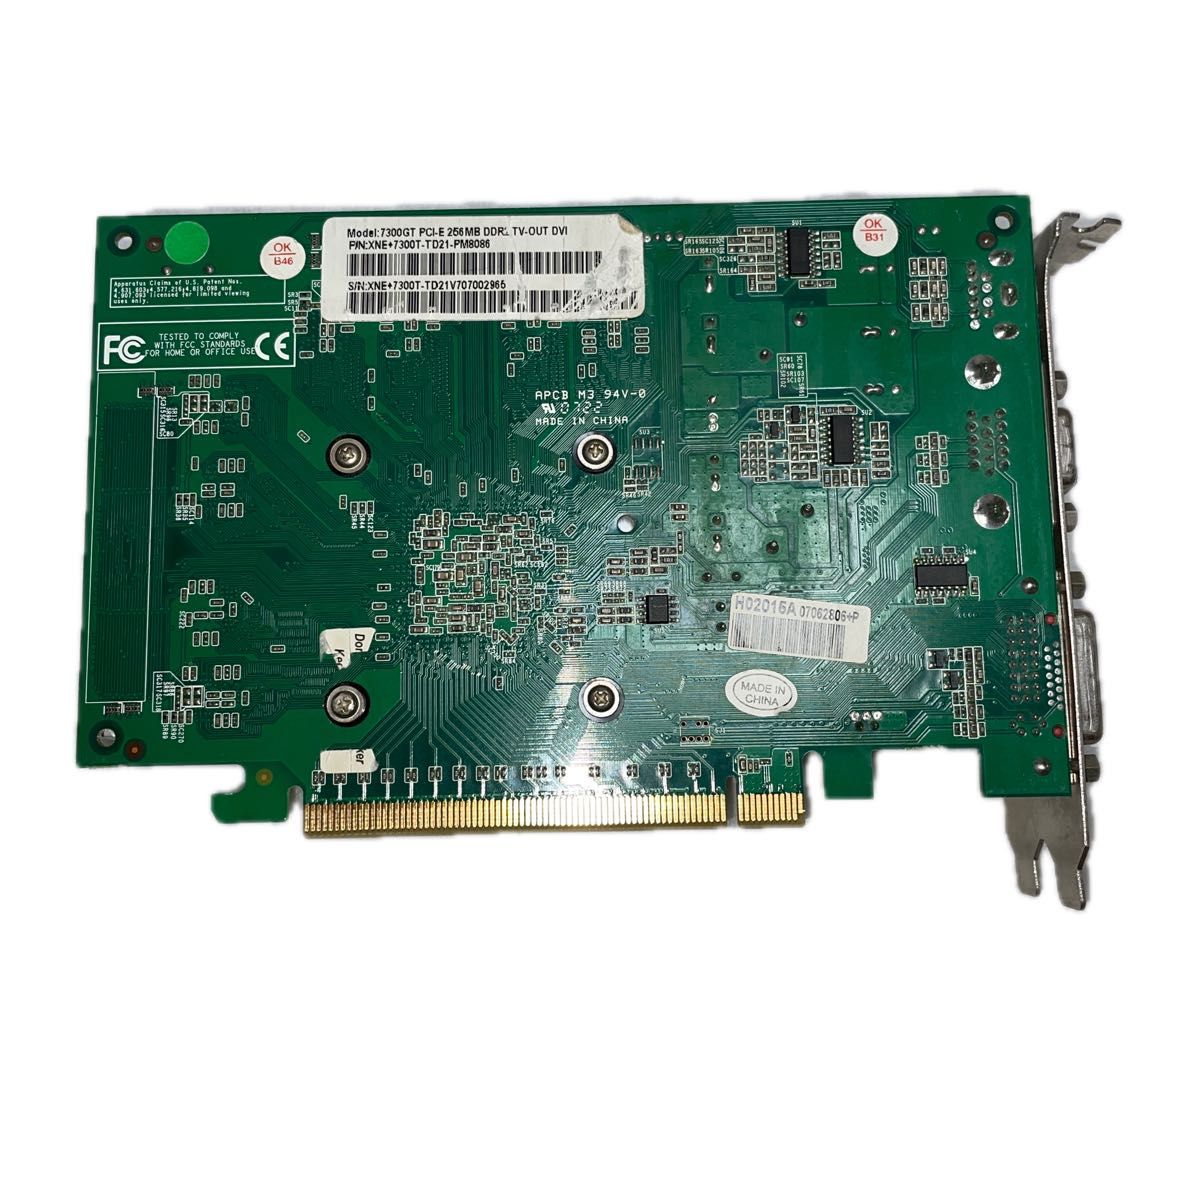 7300GT  PCI-E 256MB  DDR2 TV-OUT  DVI        ビデオカード